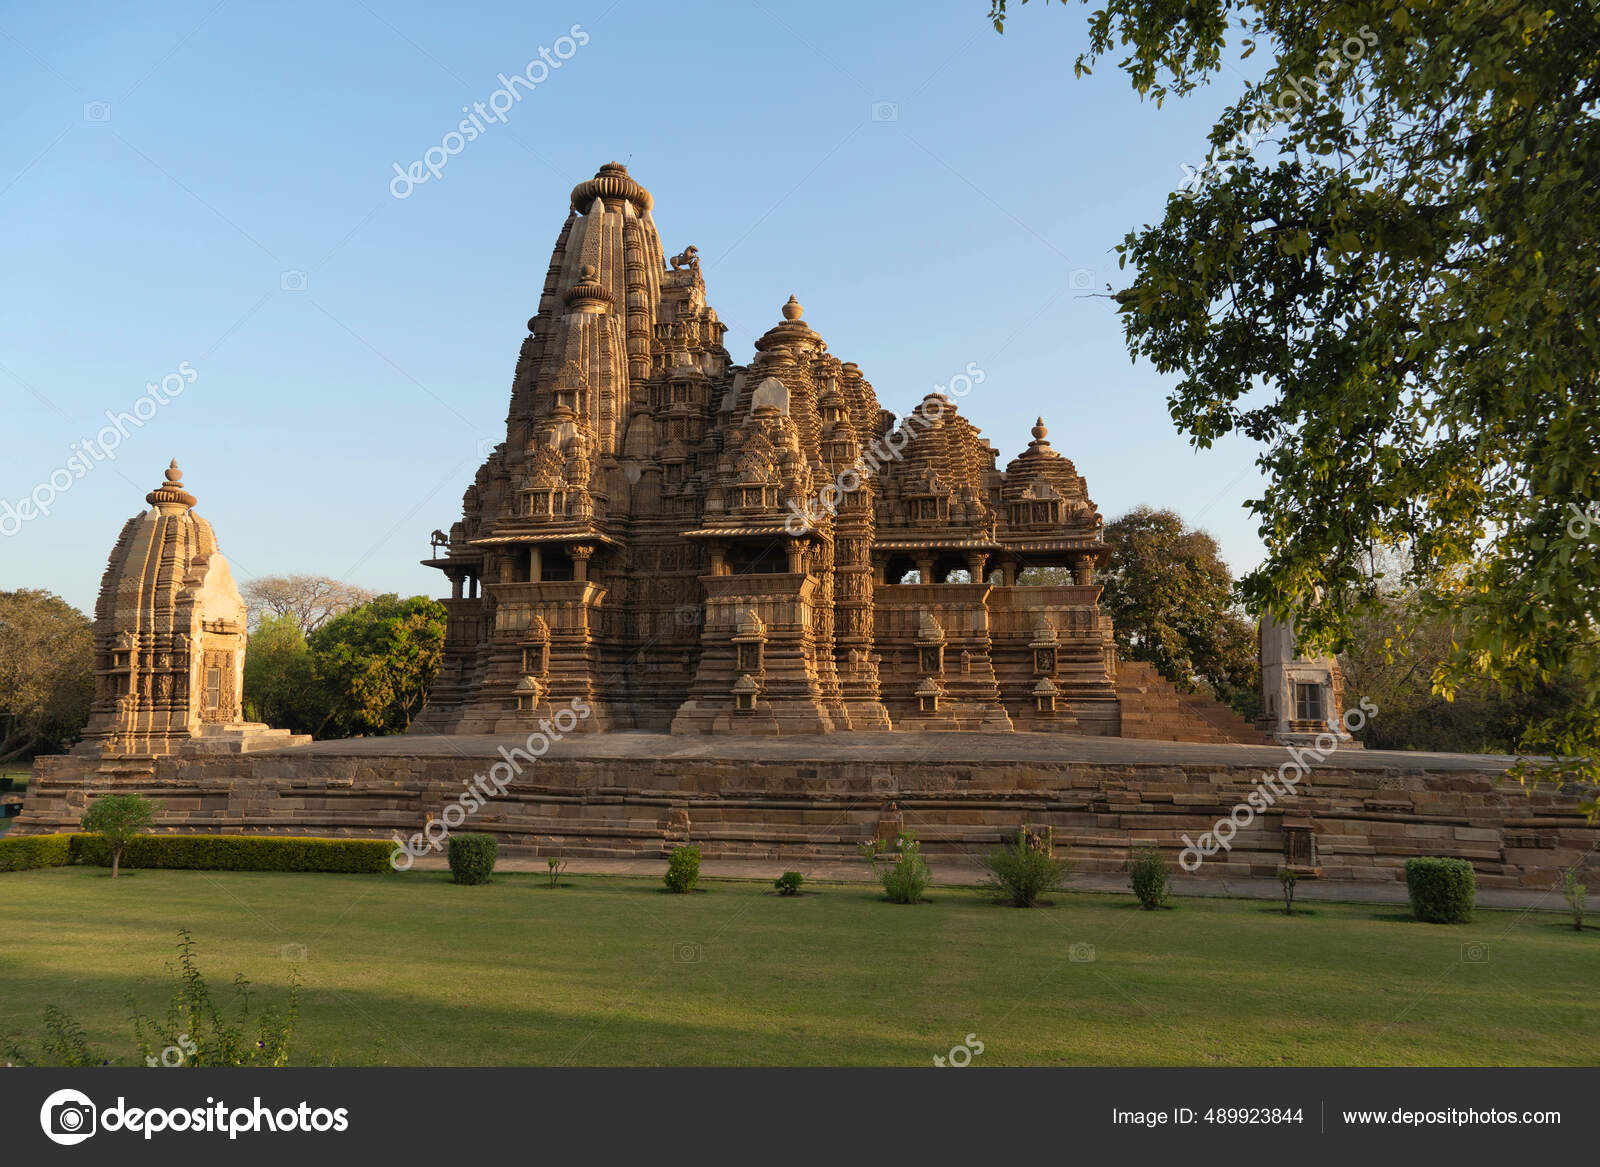 Detail of the Vamana Temple in Khajuraho, Madhya Pradesh, India. Forms part of the Khajuraho Group of Monuments, a UNESCO World Heritage Site. Stock Photo | Adobe Stock